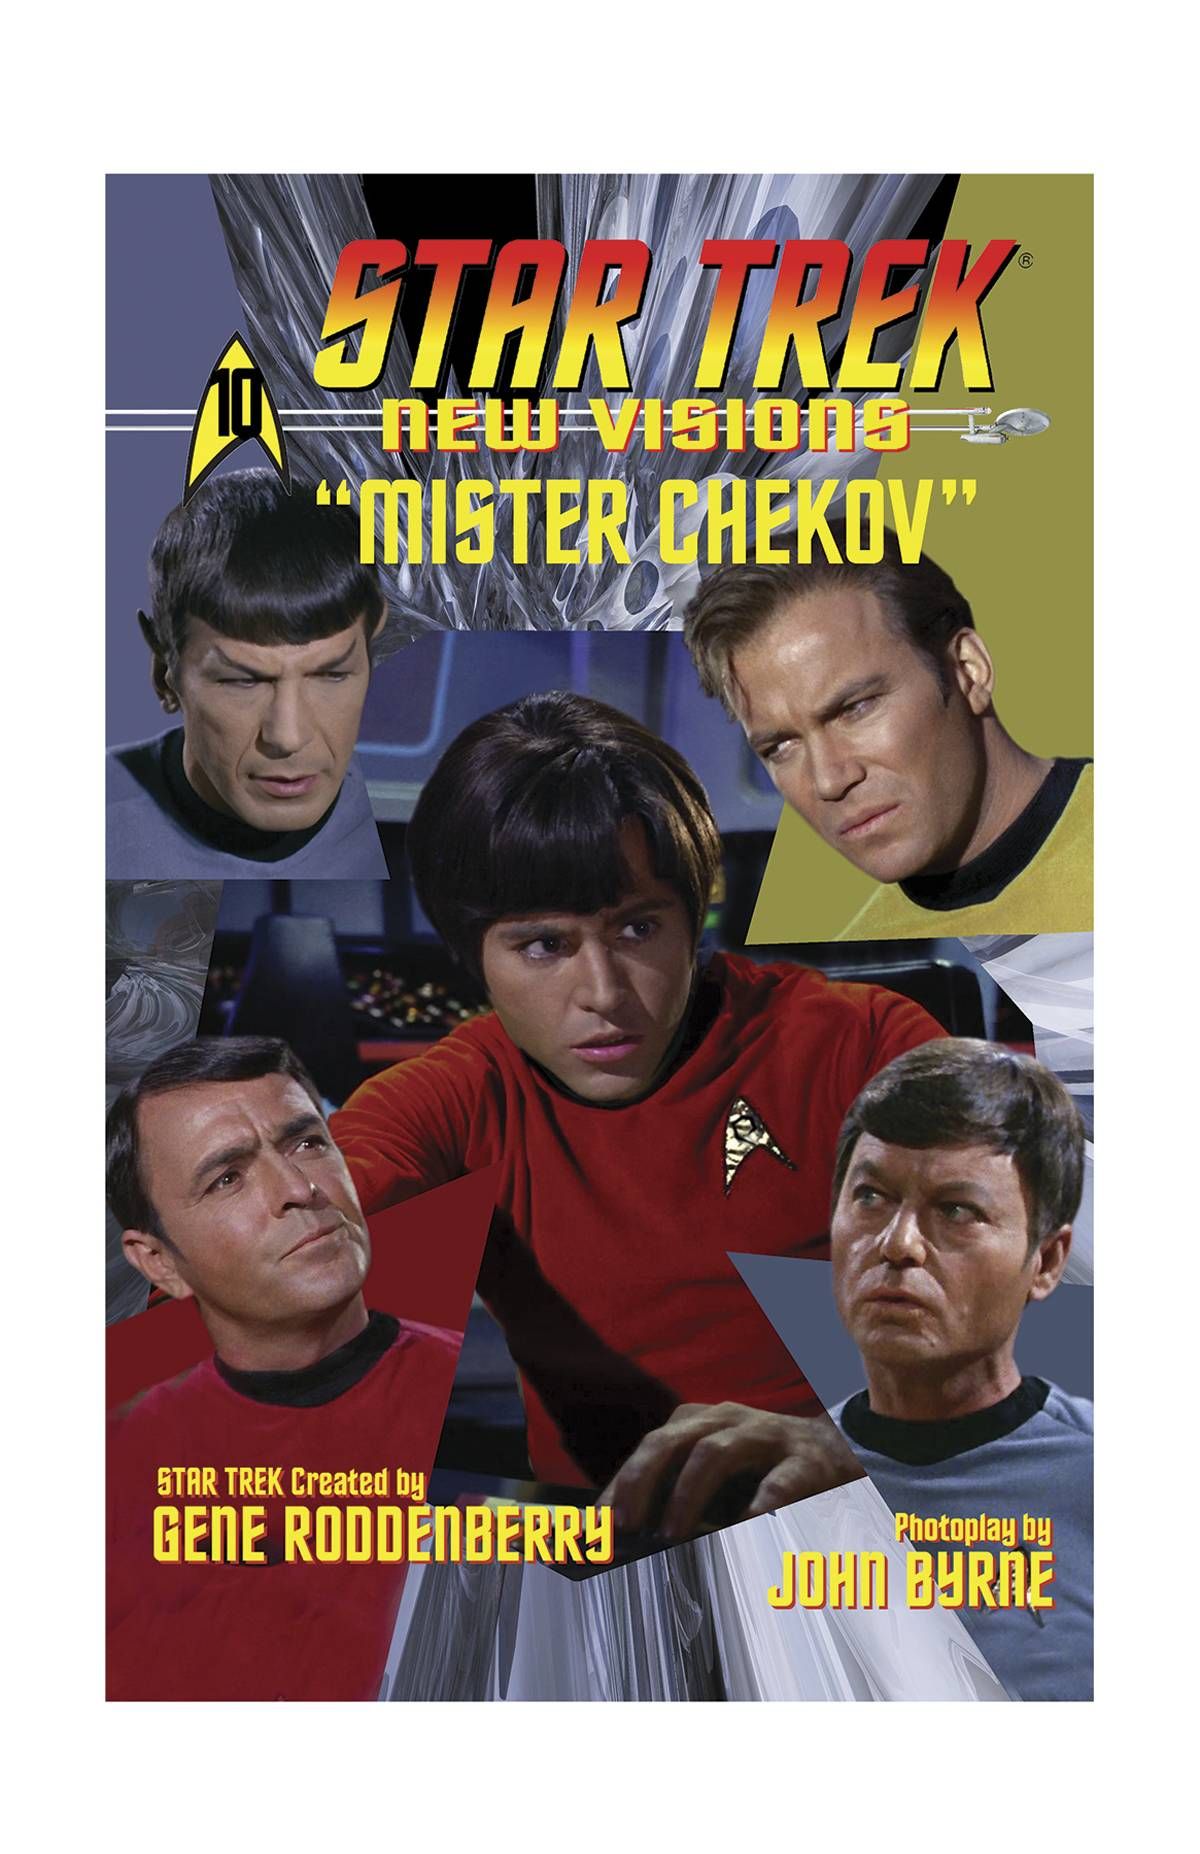 Star Trek: New Visions #10 (Mister Chekov) Comic